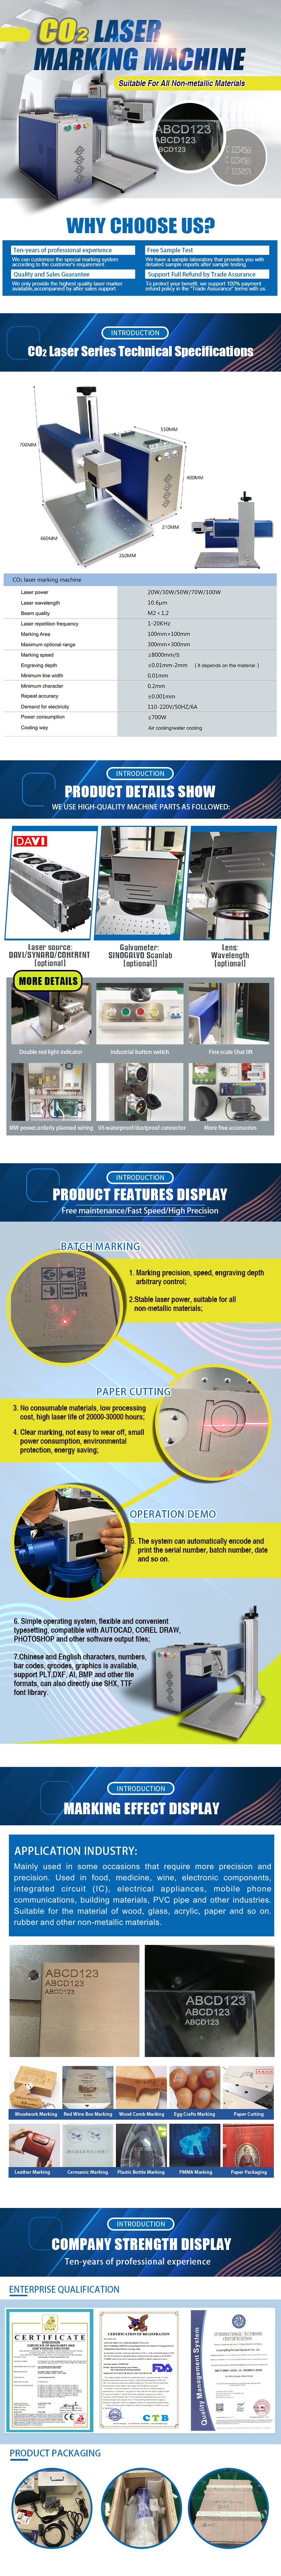 ZAC CO2 Laser Engraver 30W/50W Laser Marking Machine Portable for